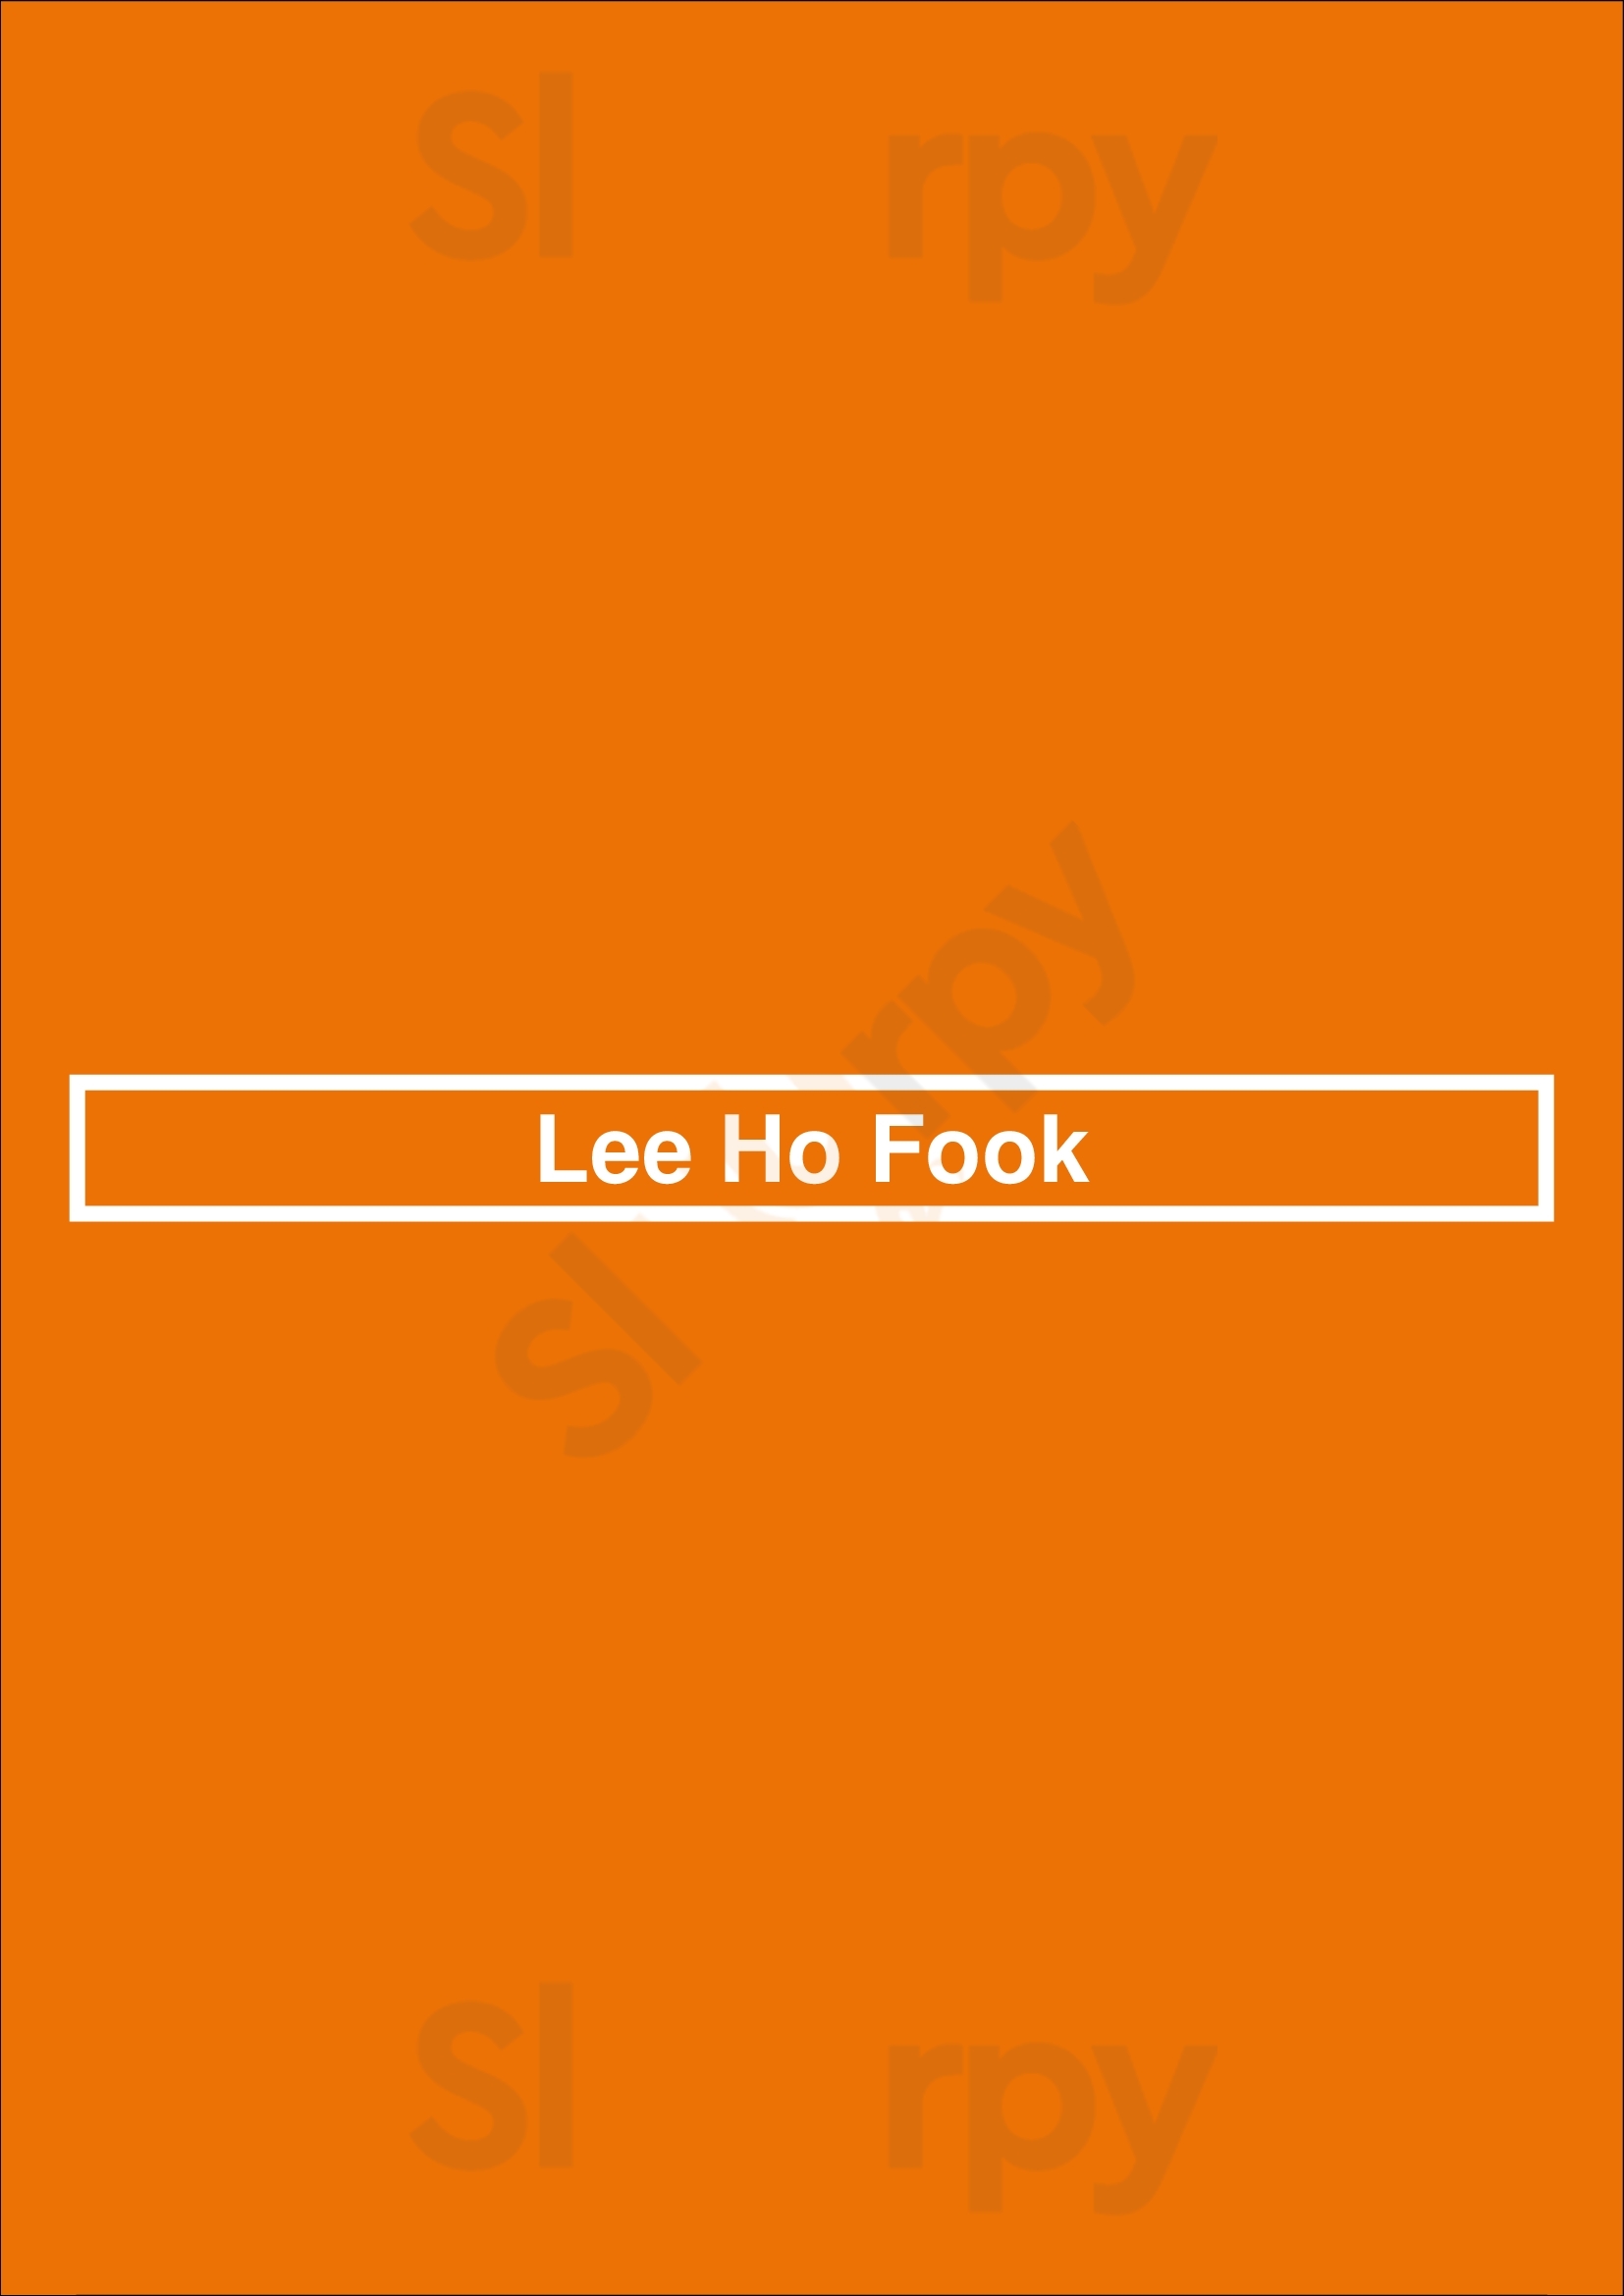 Lee Ho Fook Melbourne Menu - 1